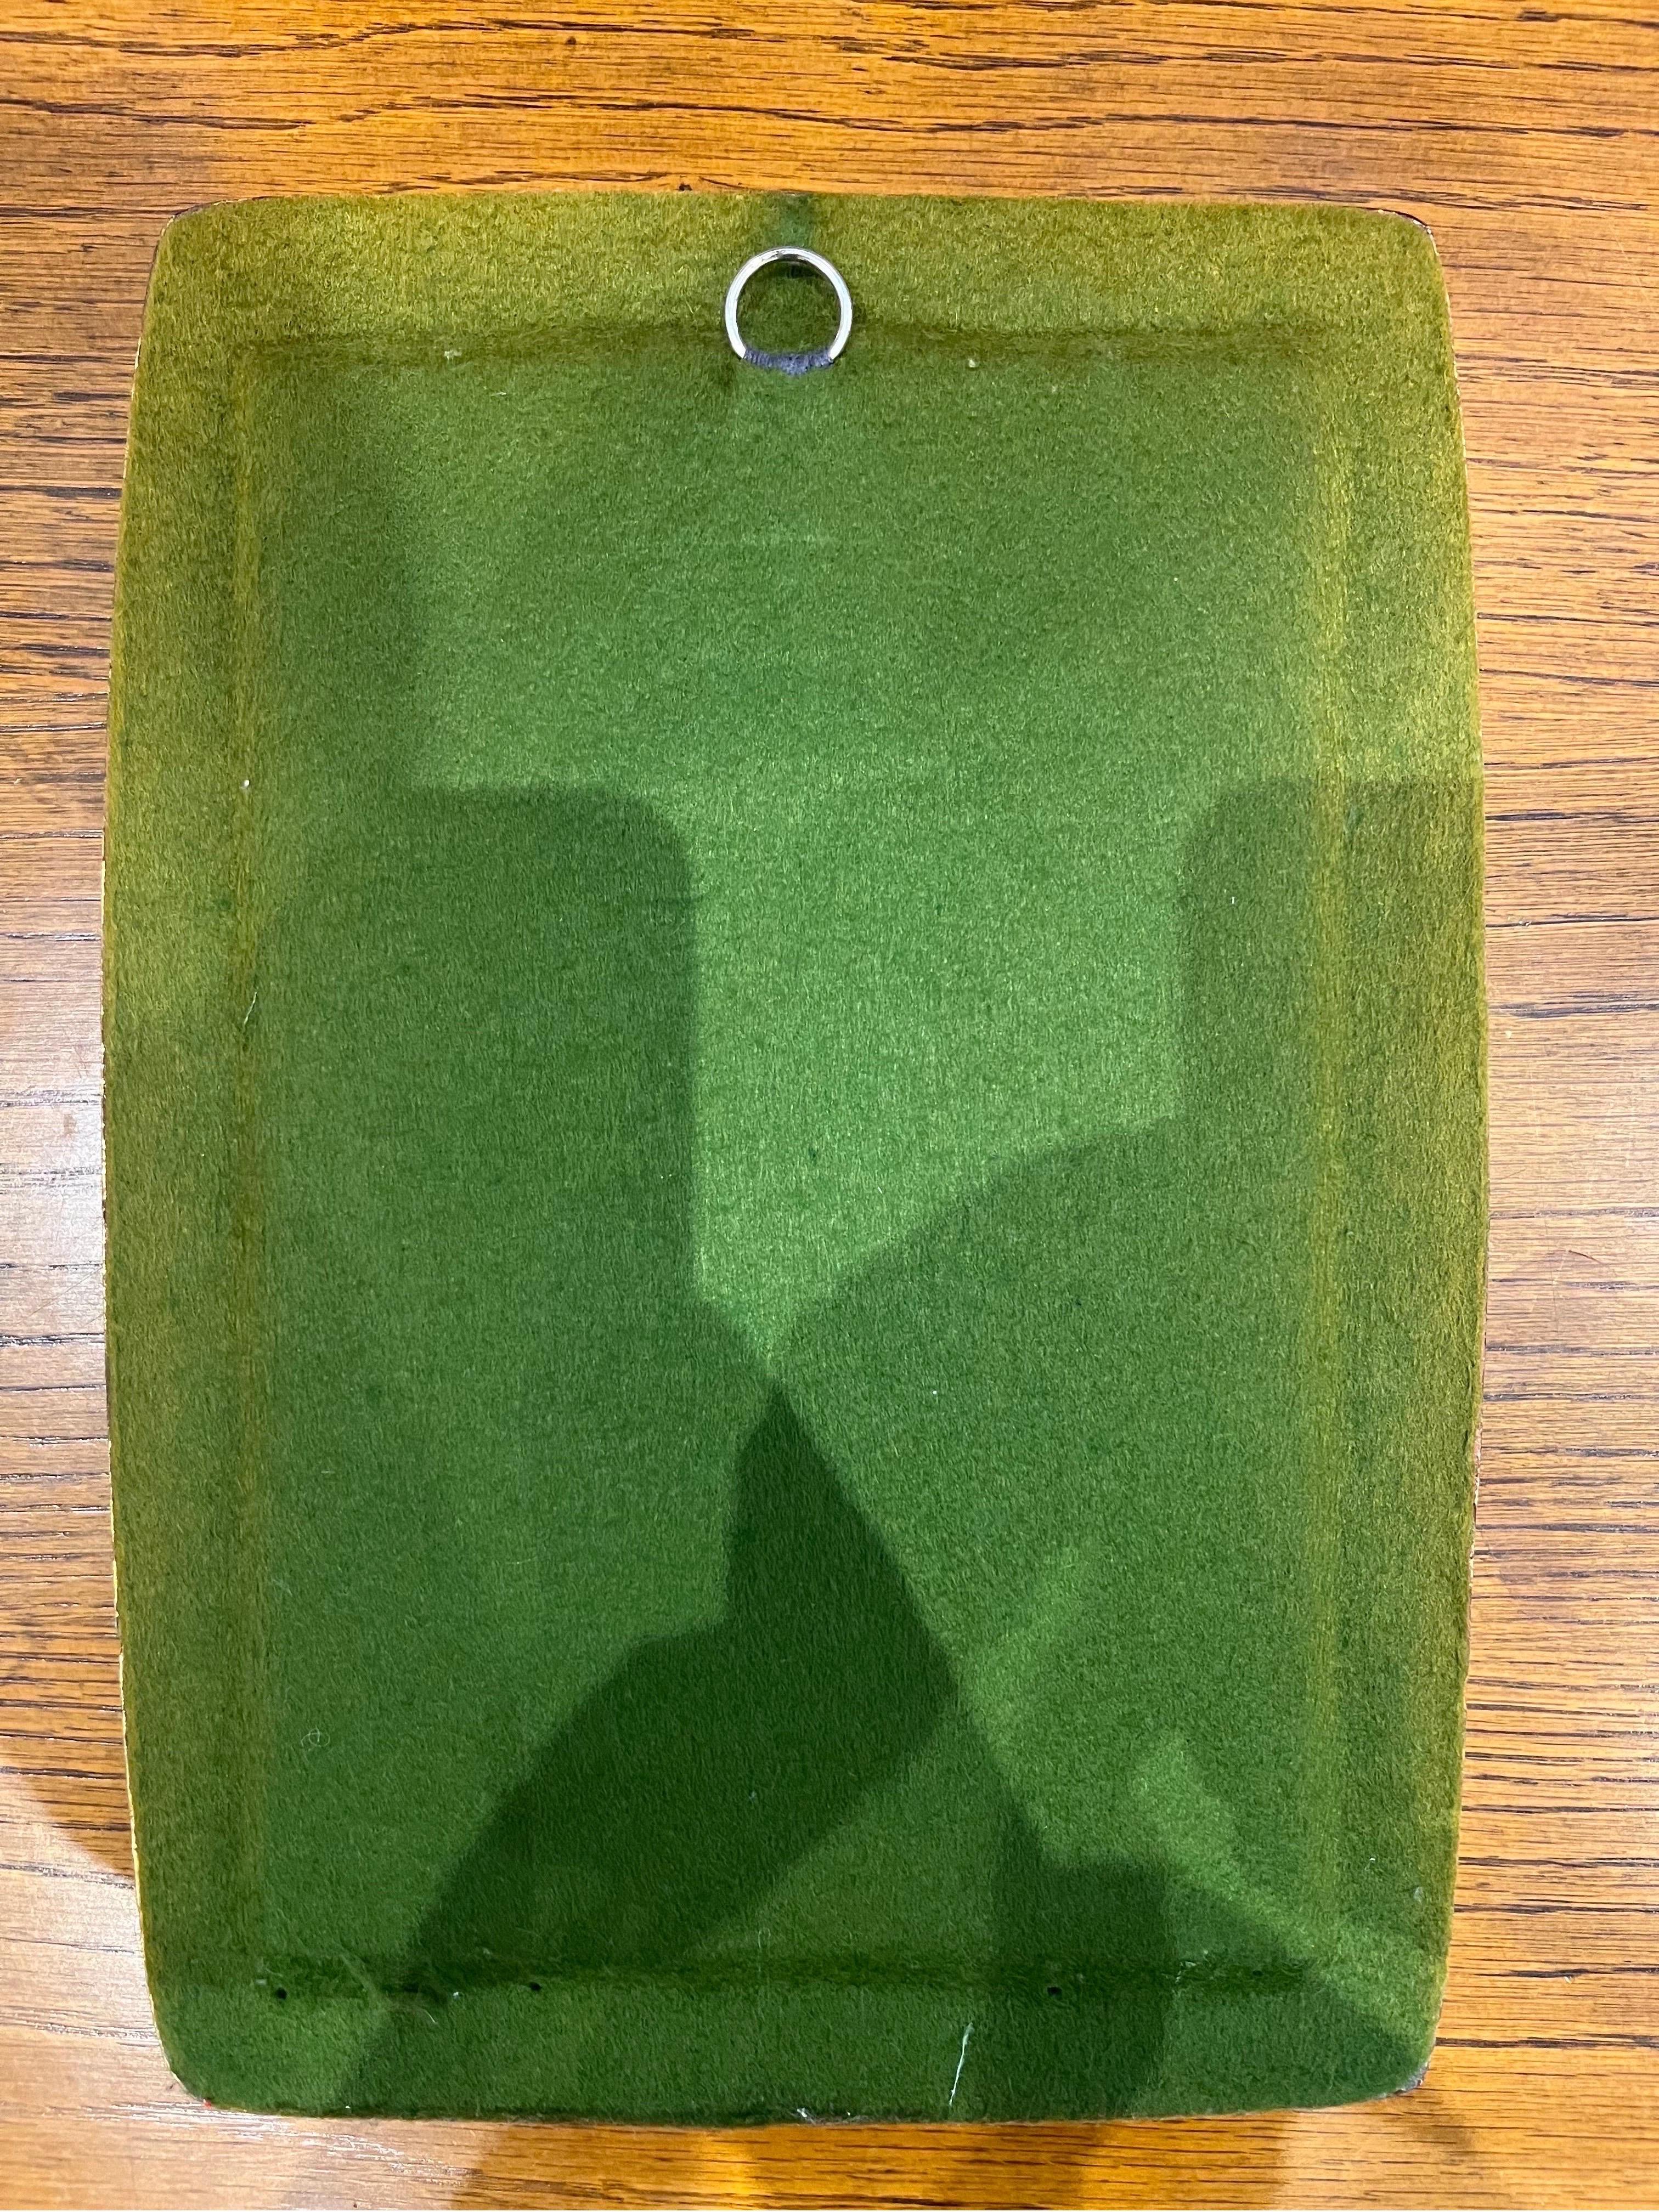 miroir avec feutrine verte au dos